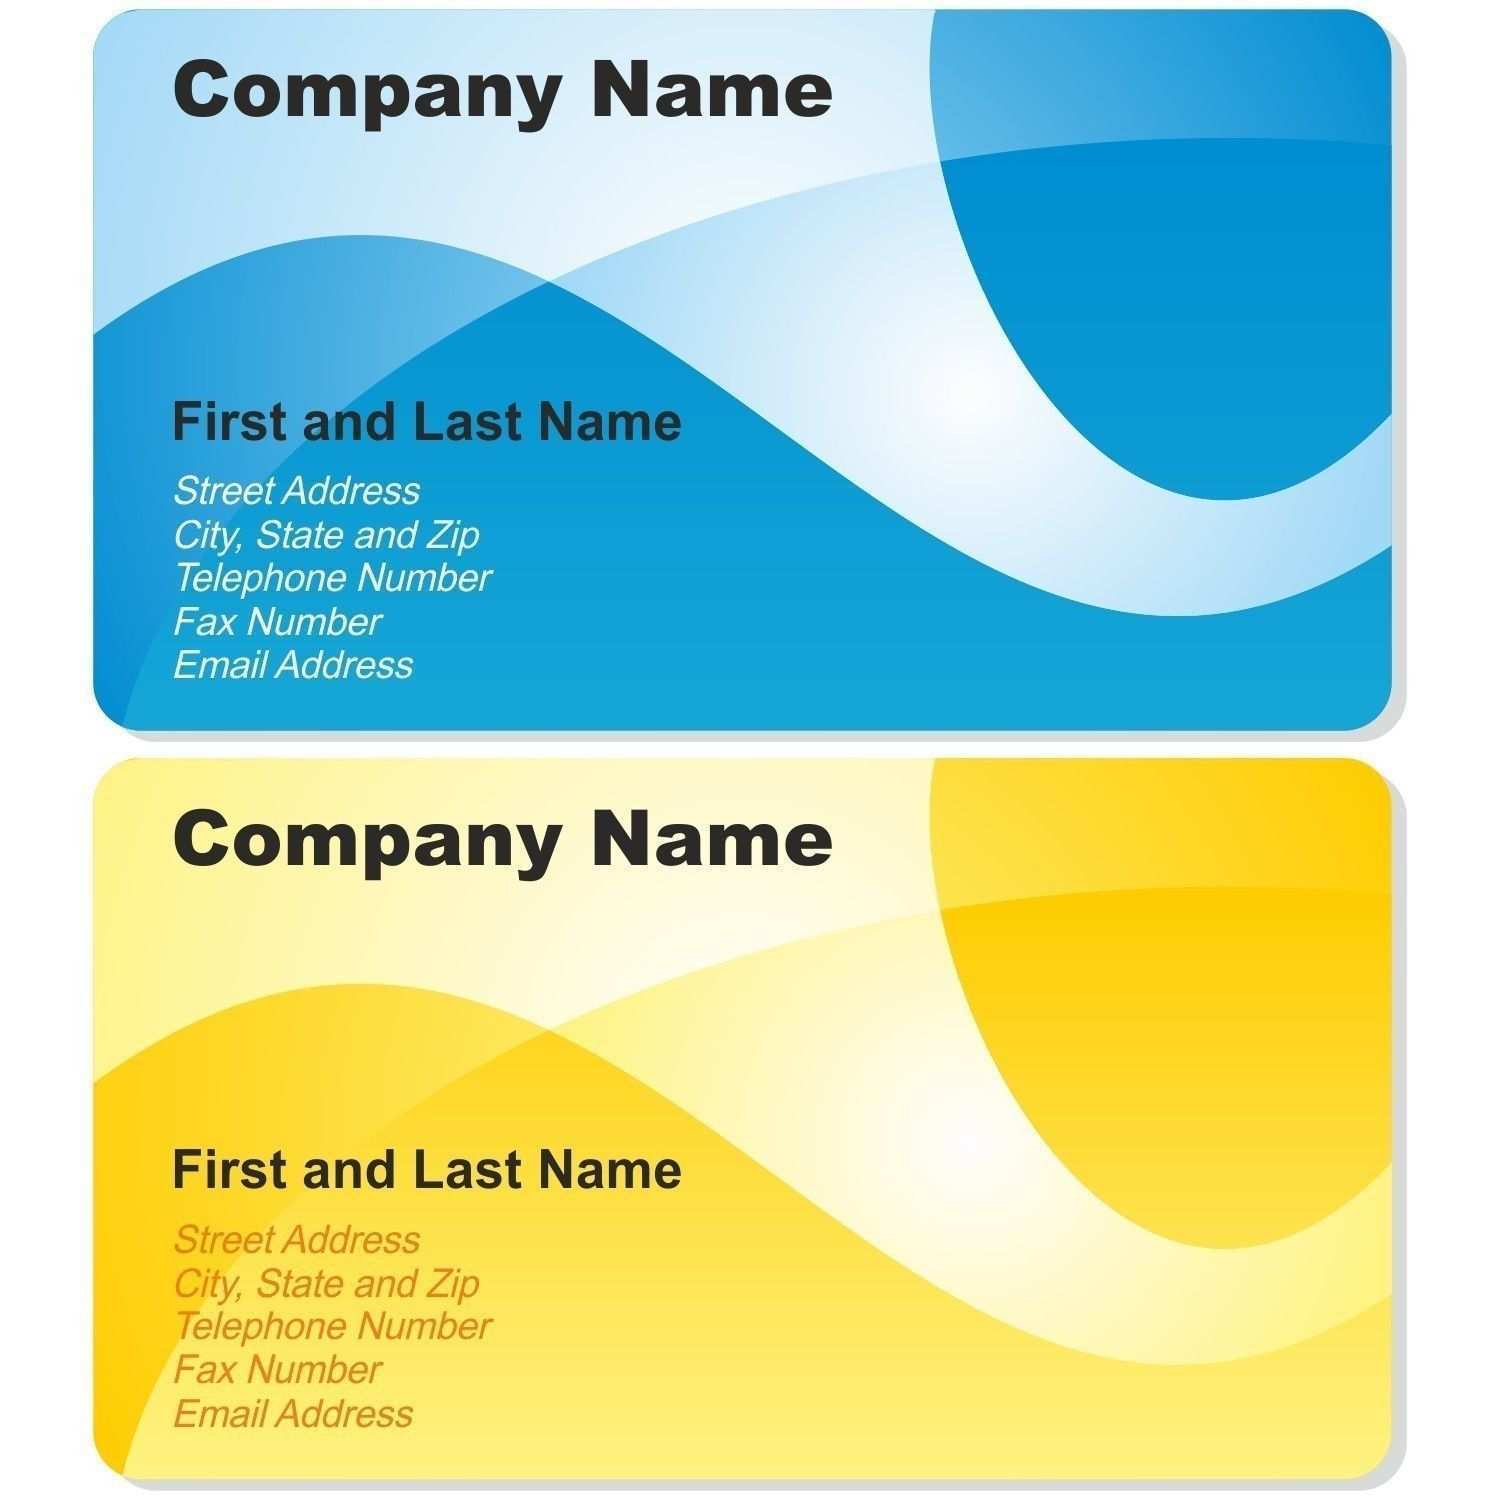 85 Customize Business Card Templates Corel Draw Photo by Business Card Templates Corel Draw